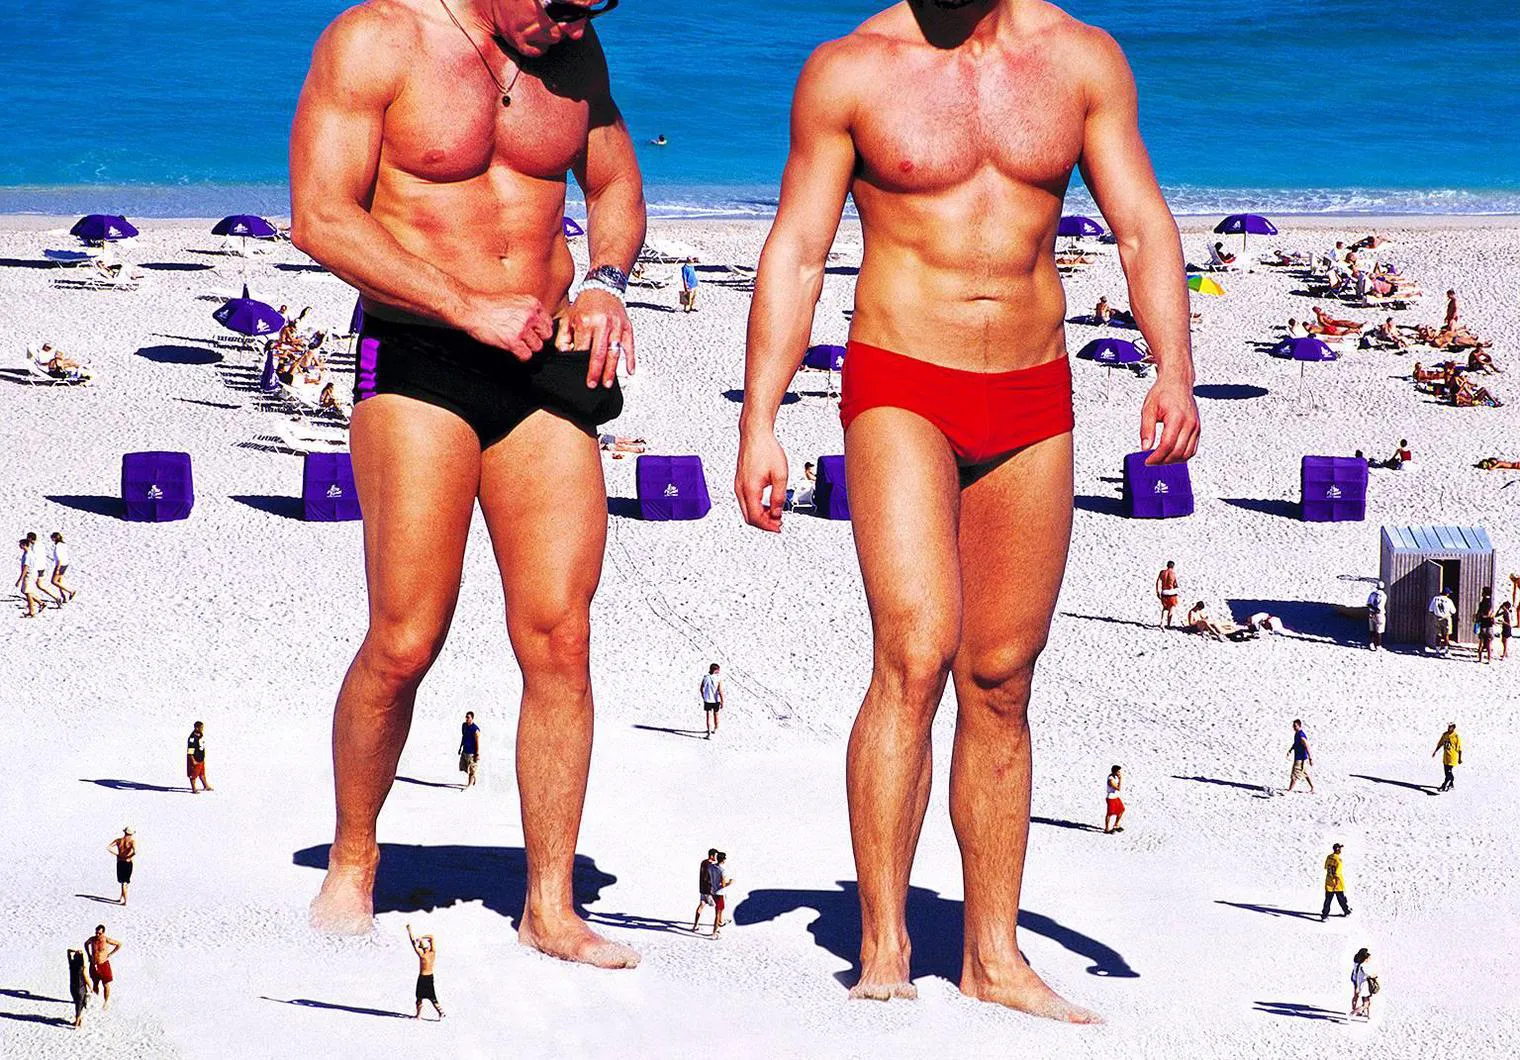 Miami Nudist Beach Pics Gallery - Mitchell Funk - Semi Nude Men, Muscle Beach Miami Beach | Widewalls